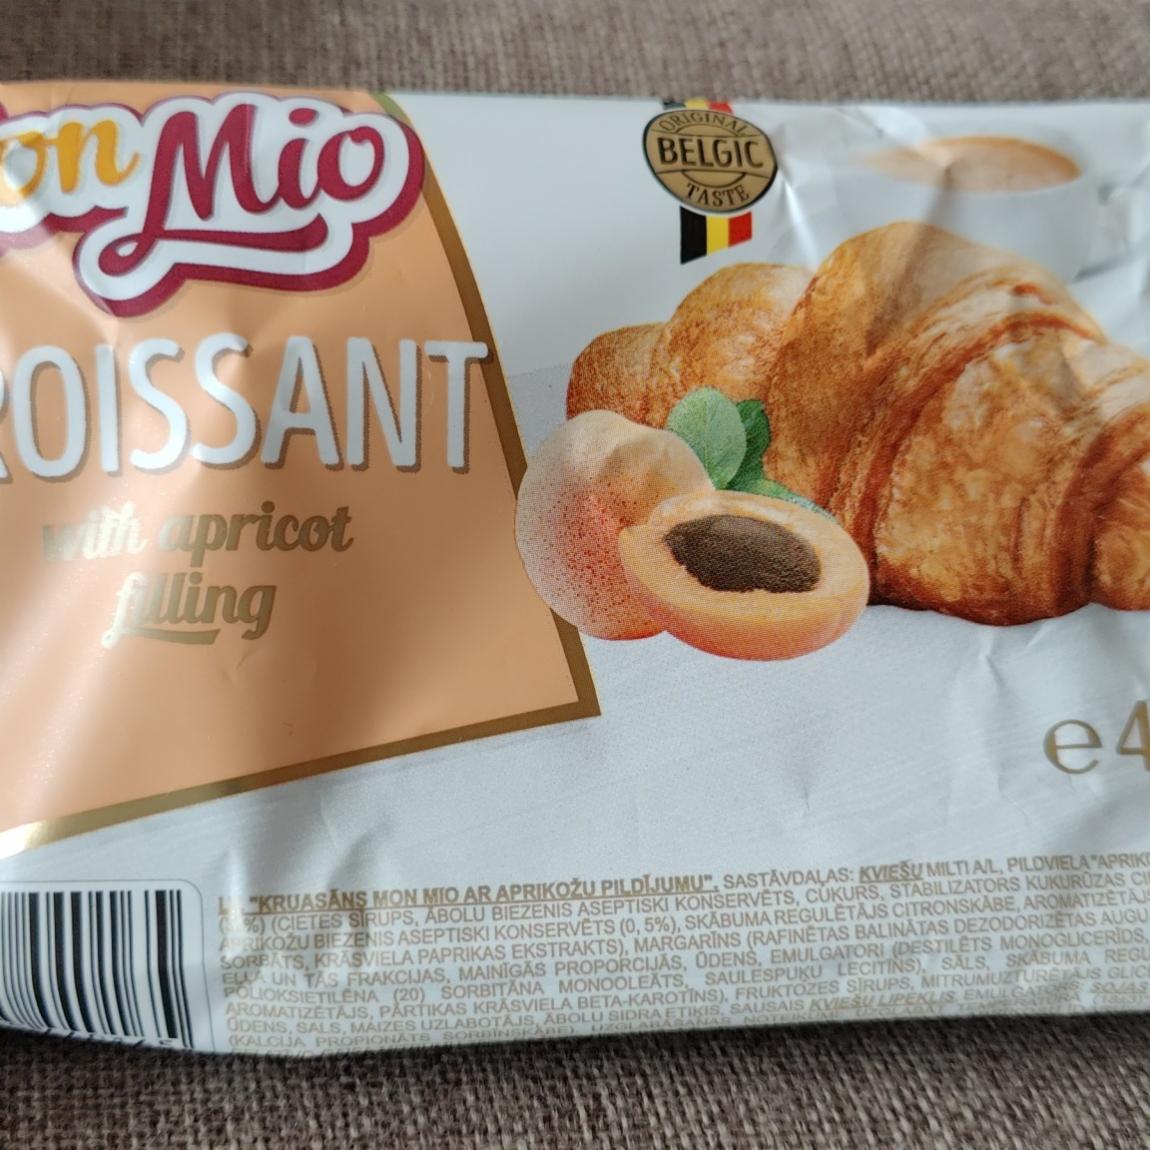 Fotografie - Croissant with apricot filling Mon Mio